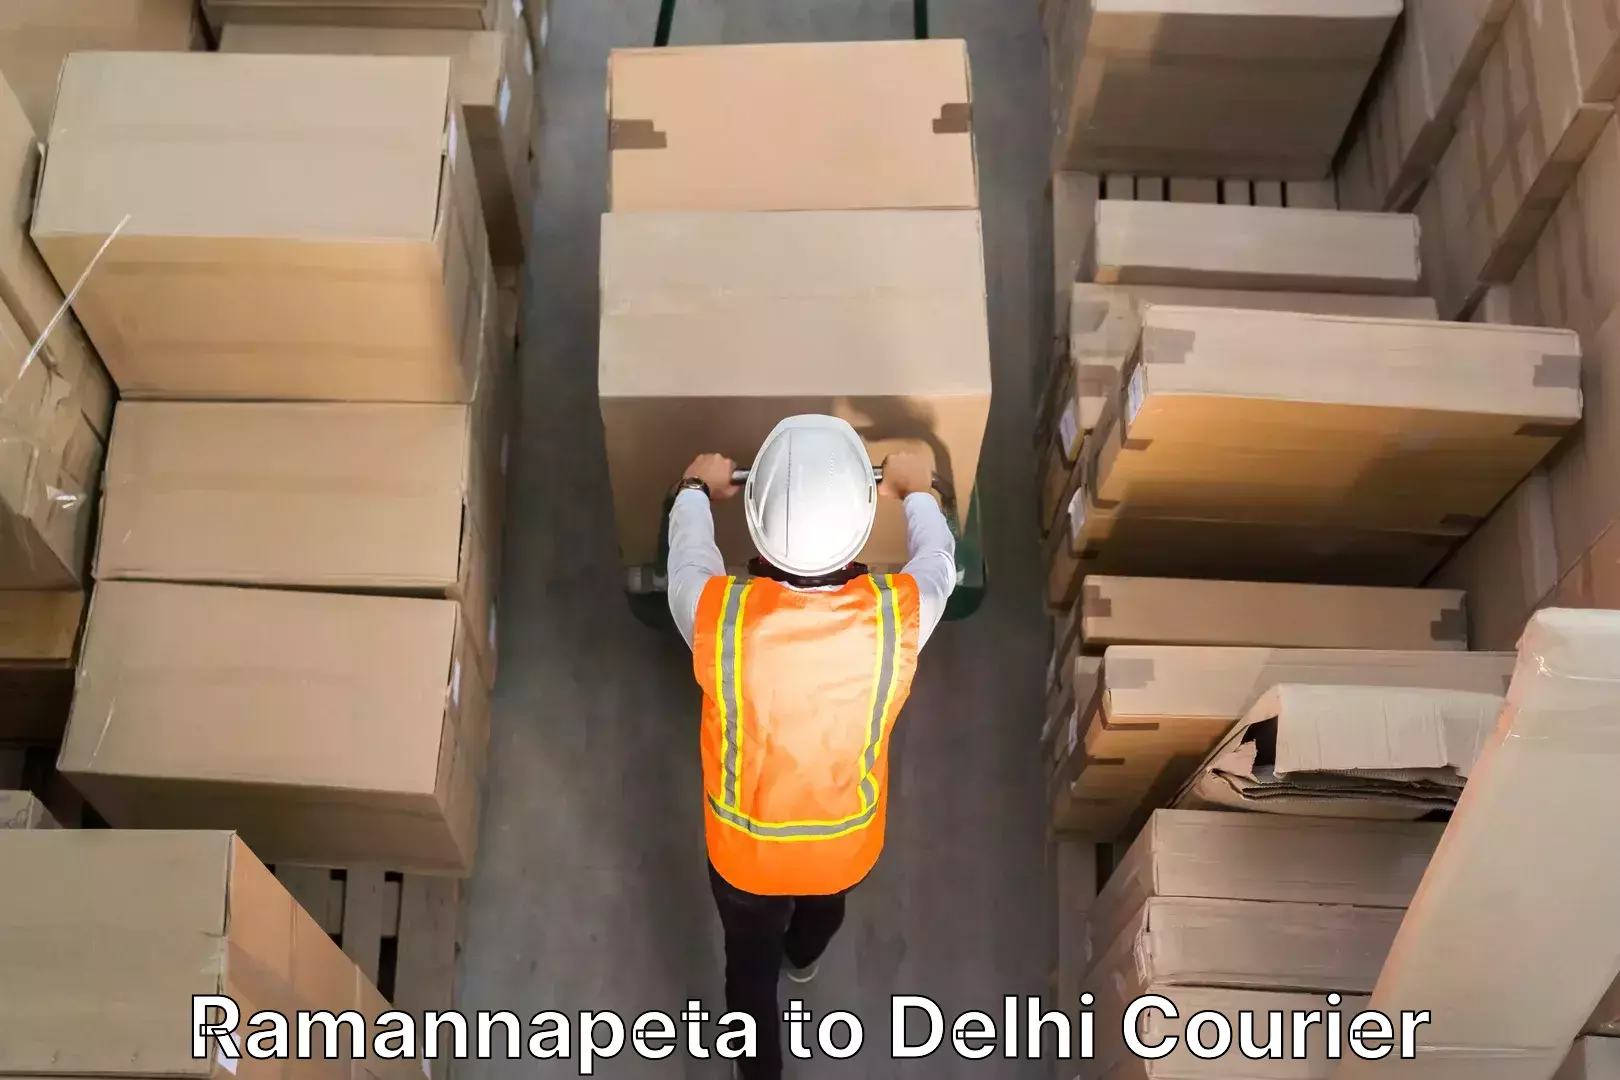 Trusted relocation experts Ramannapeta to Delhi